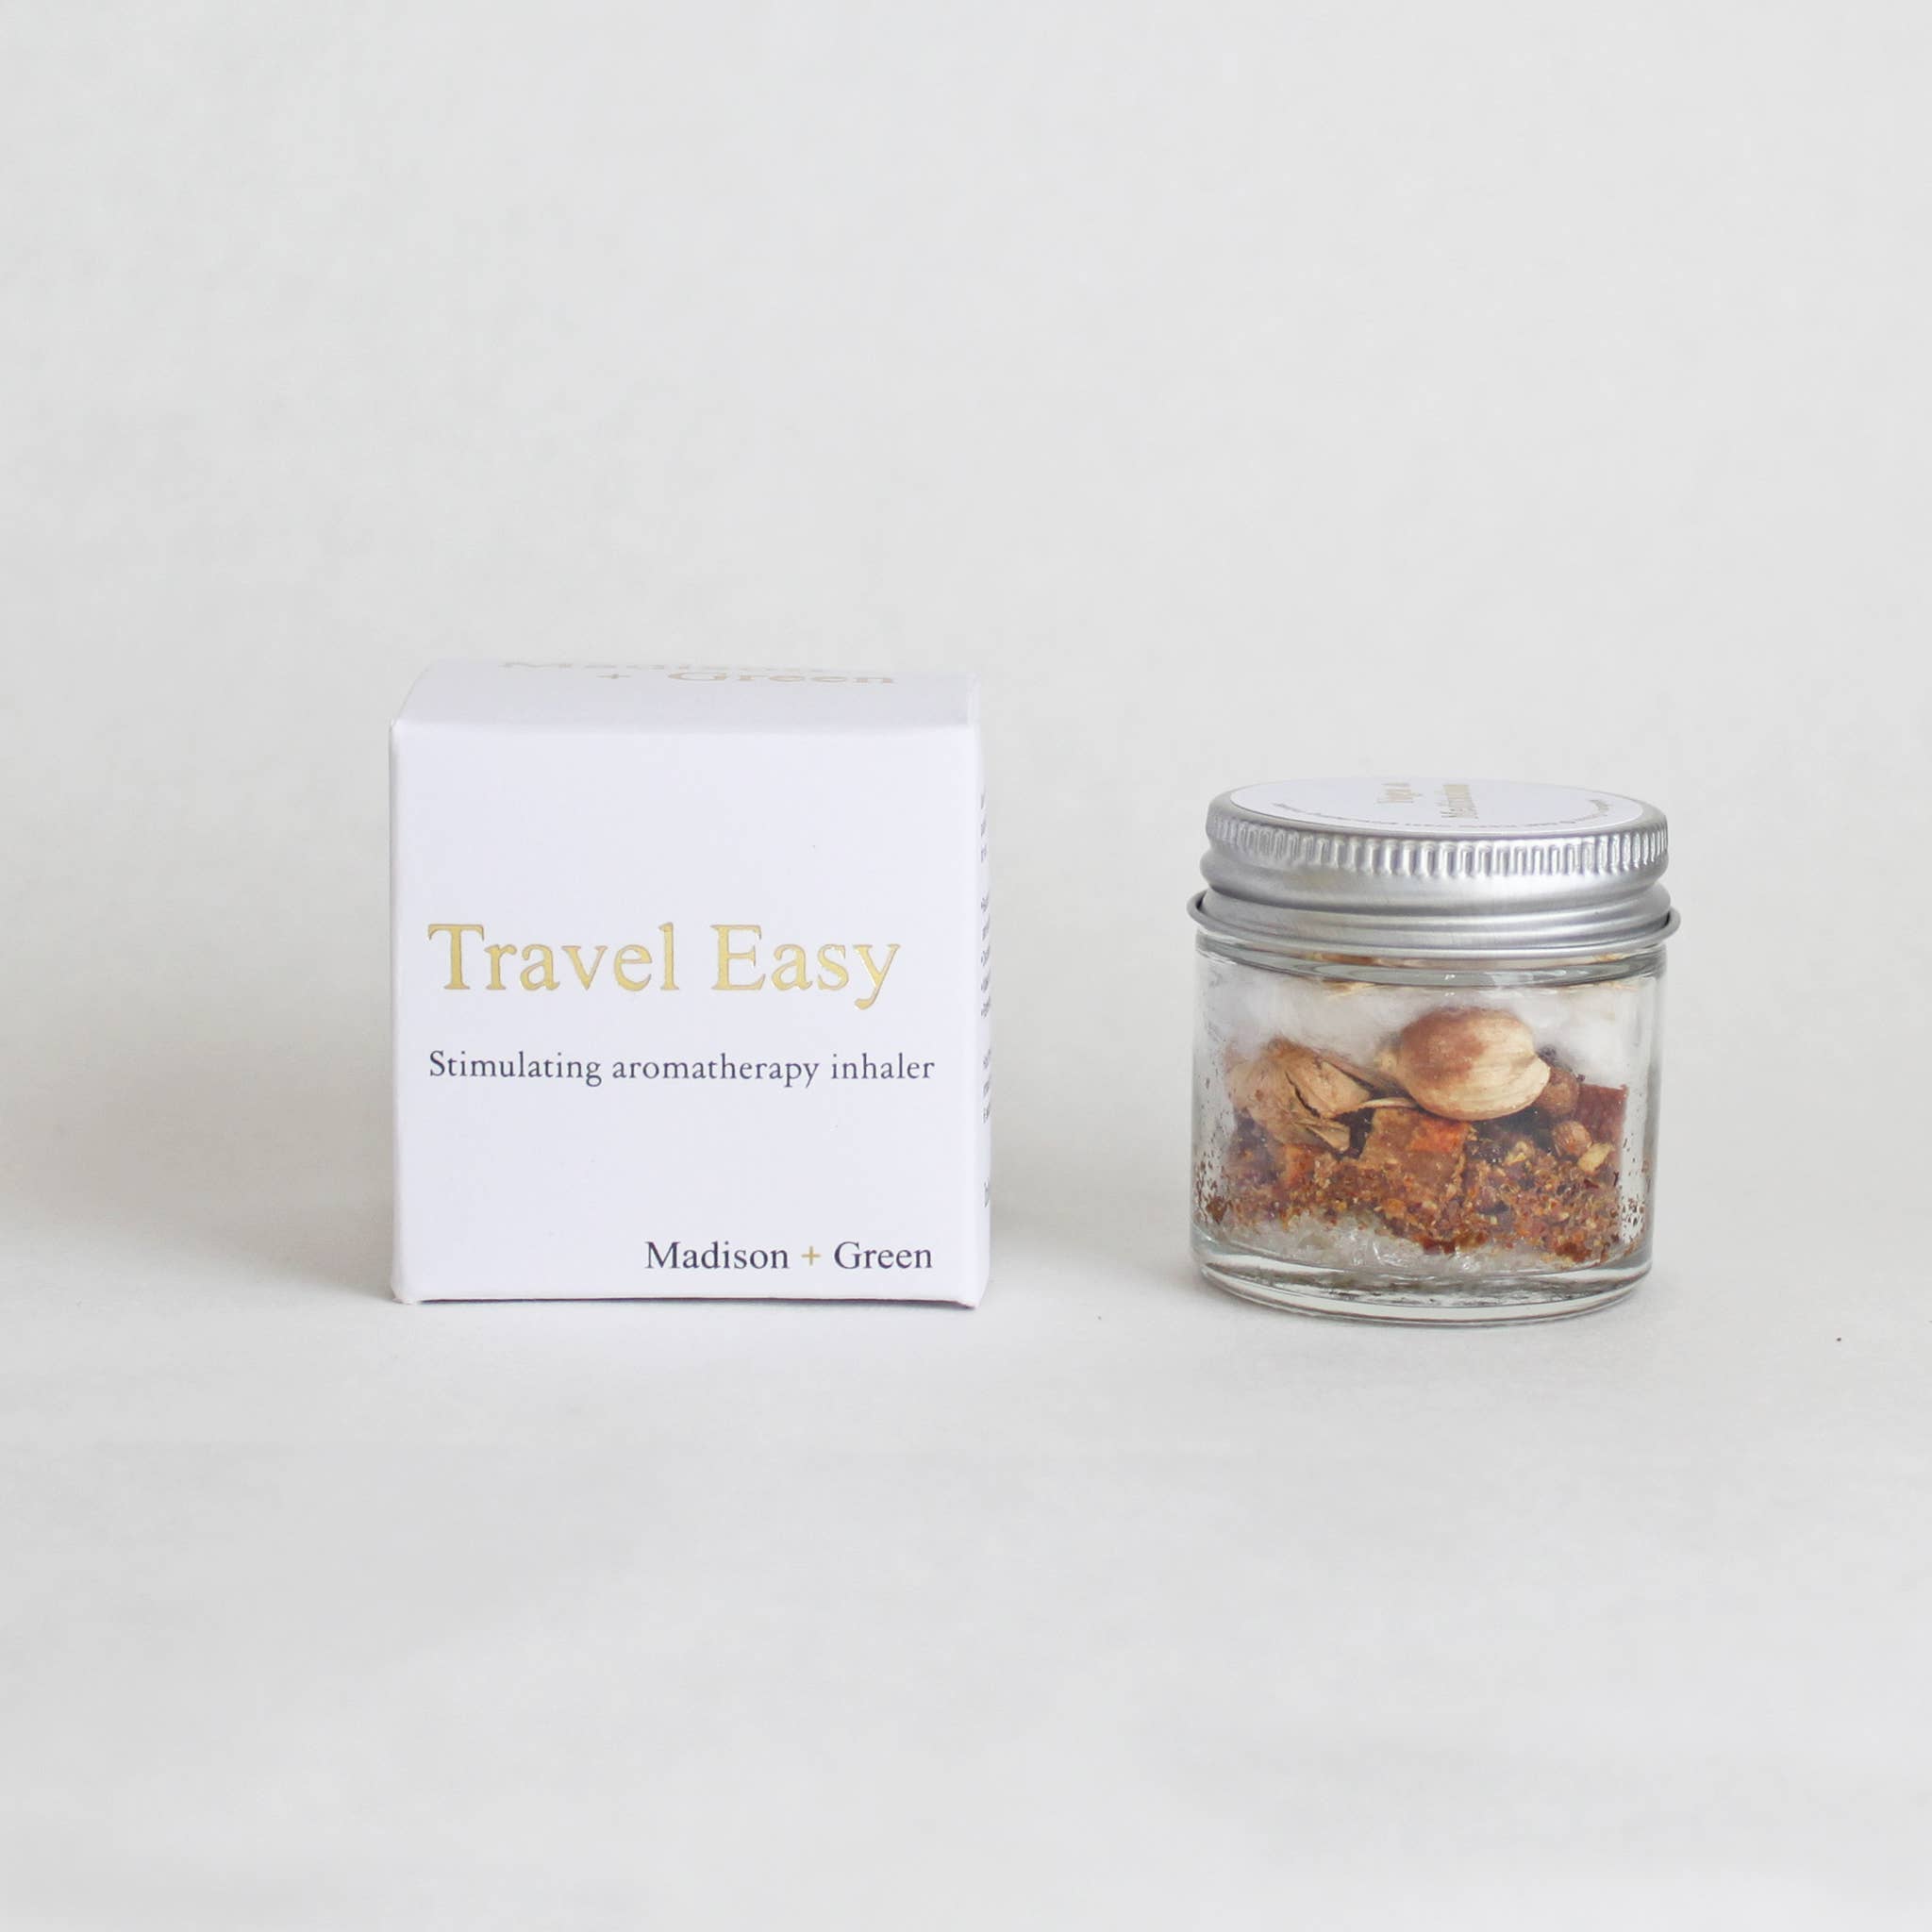 Travel Easy - Stress Relief Aromatherapy Inhaler